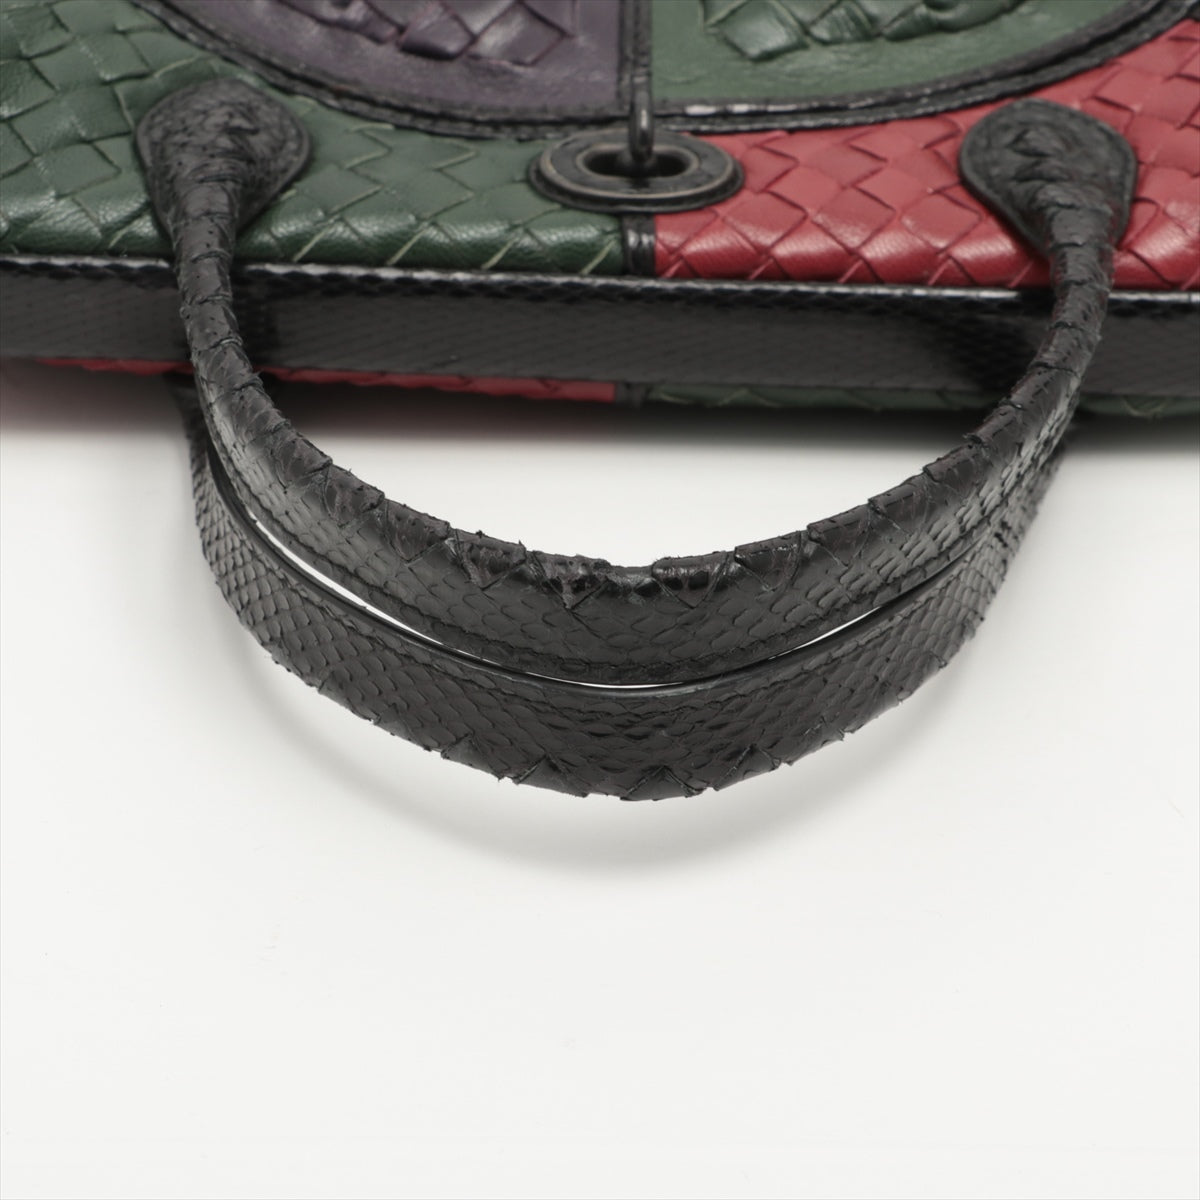 Bottega Veneta Intrecciato Leather  Pearson Handbag Multi-Color